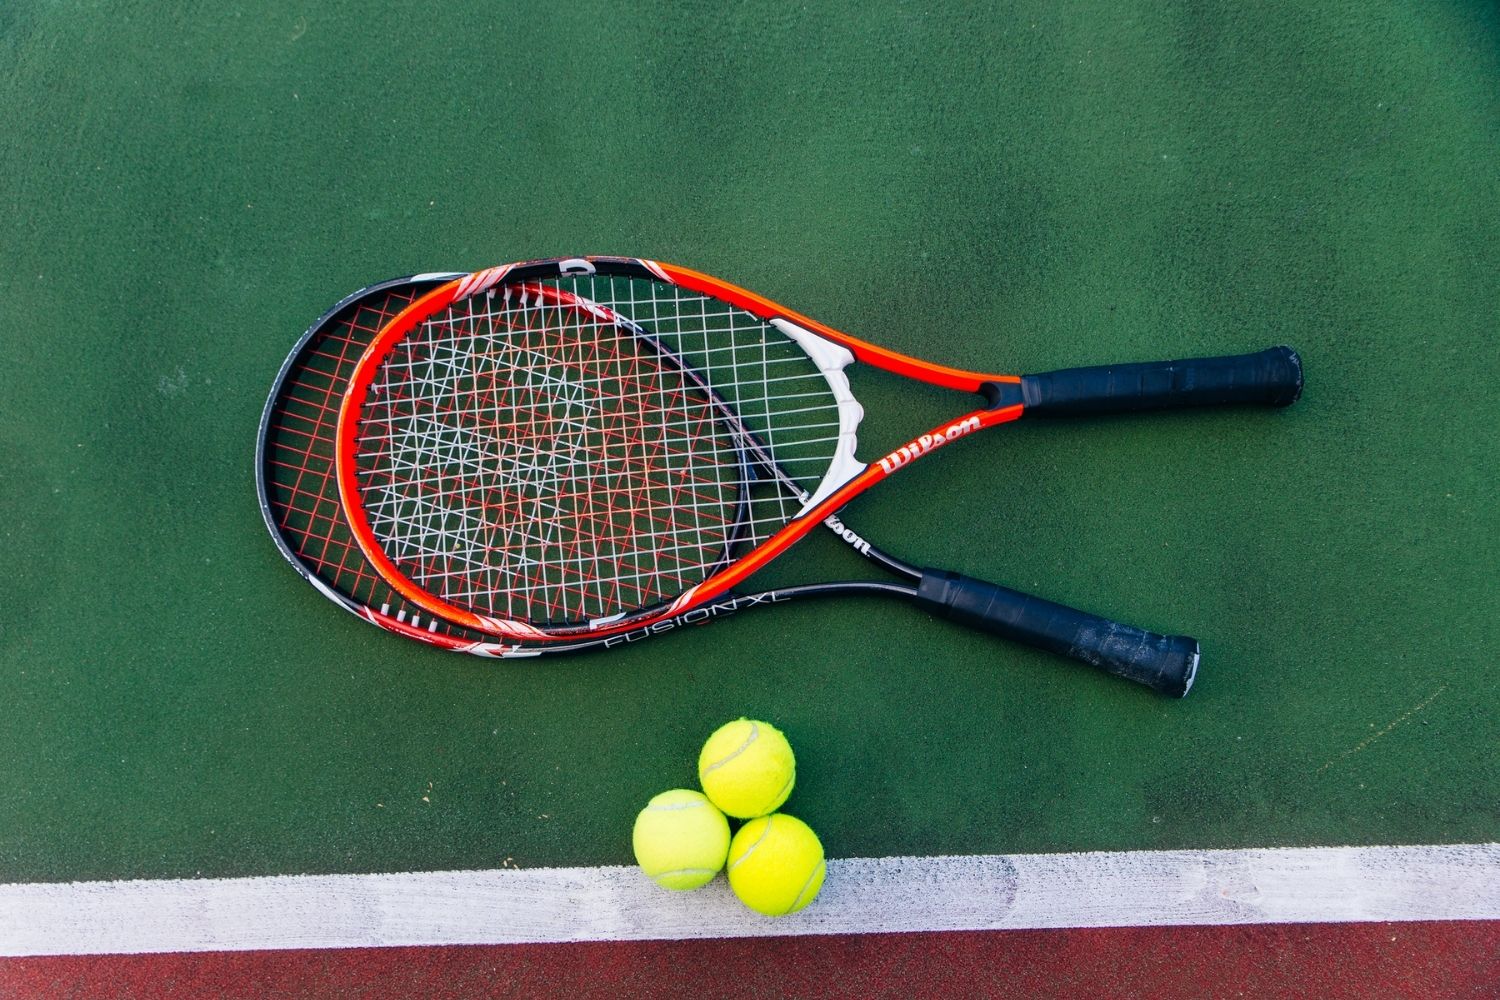 Tennis racket parts